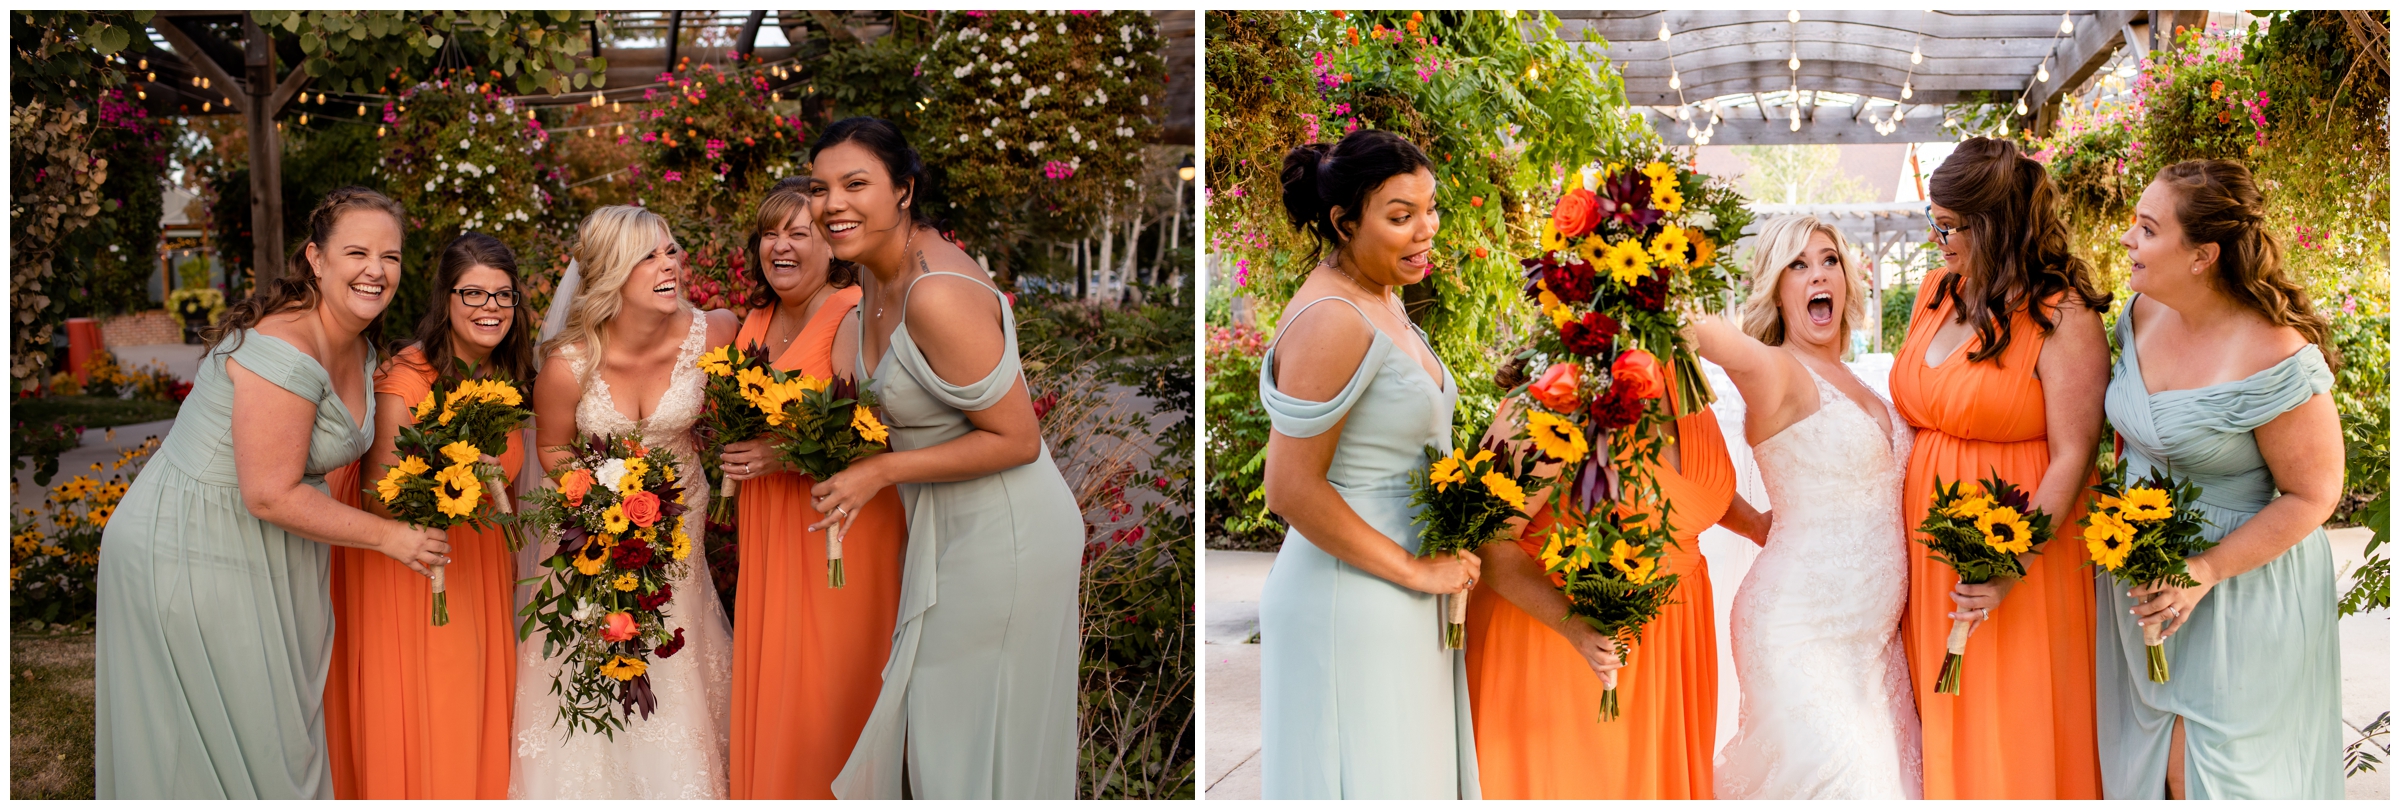 bridesmaids in sage and orange during Colorado fall wedding